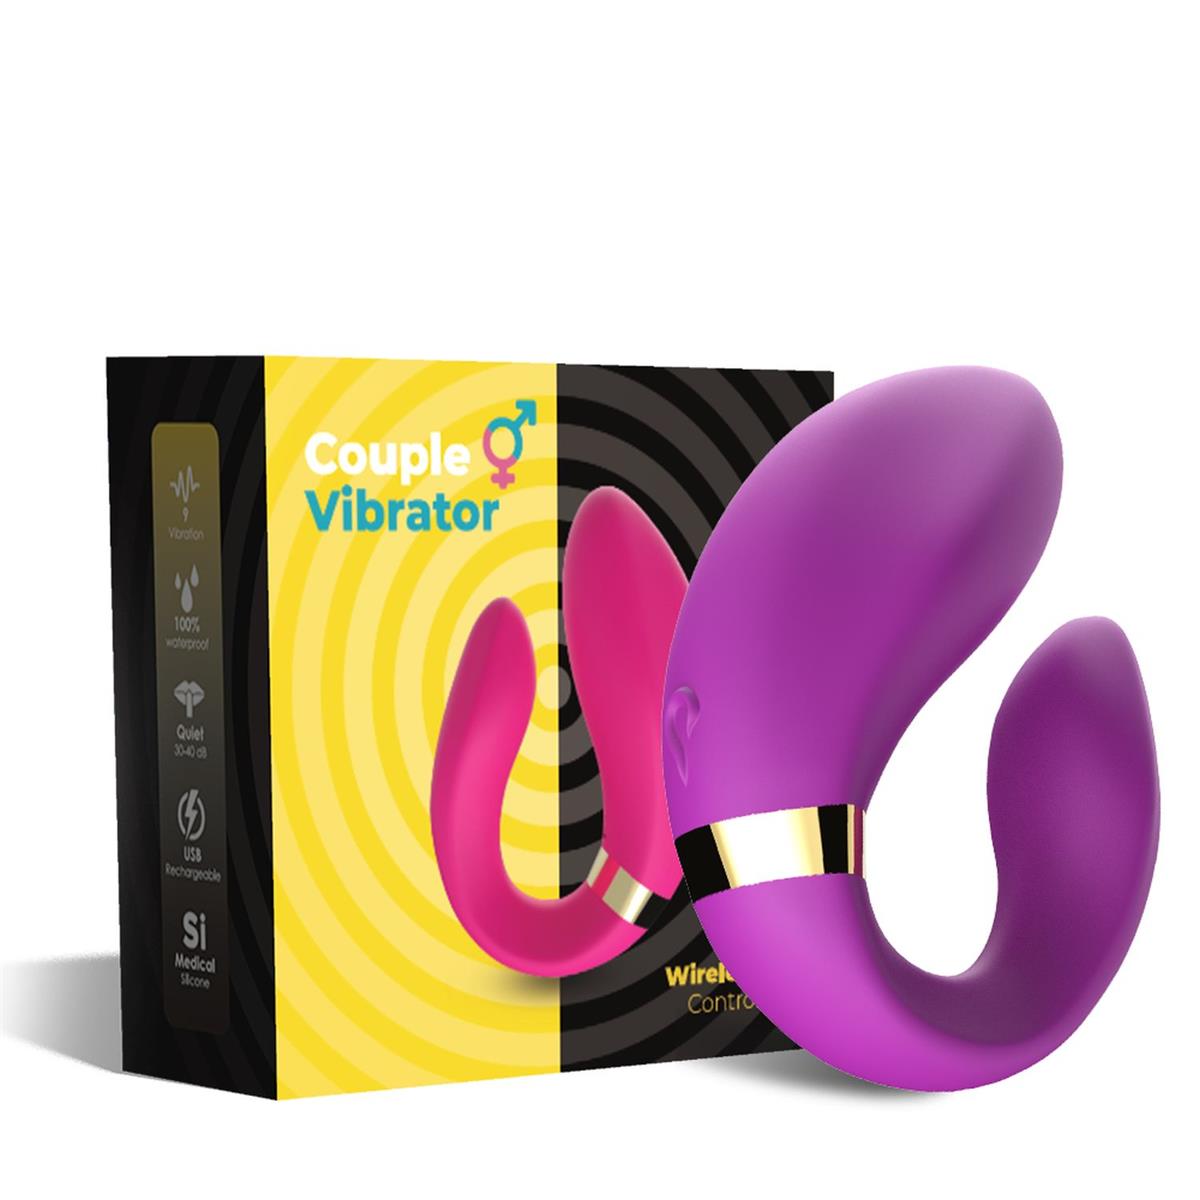 Bossoftoys - 52-00030-1 - Lesbian couple vibrator - Crescent purple - 100% waterproof - 9 vibration modes - USB rechargeable